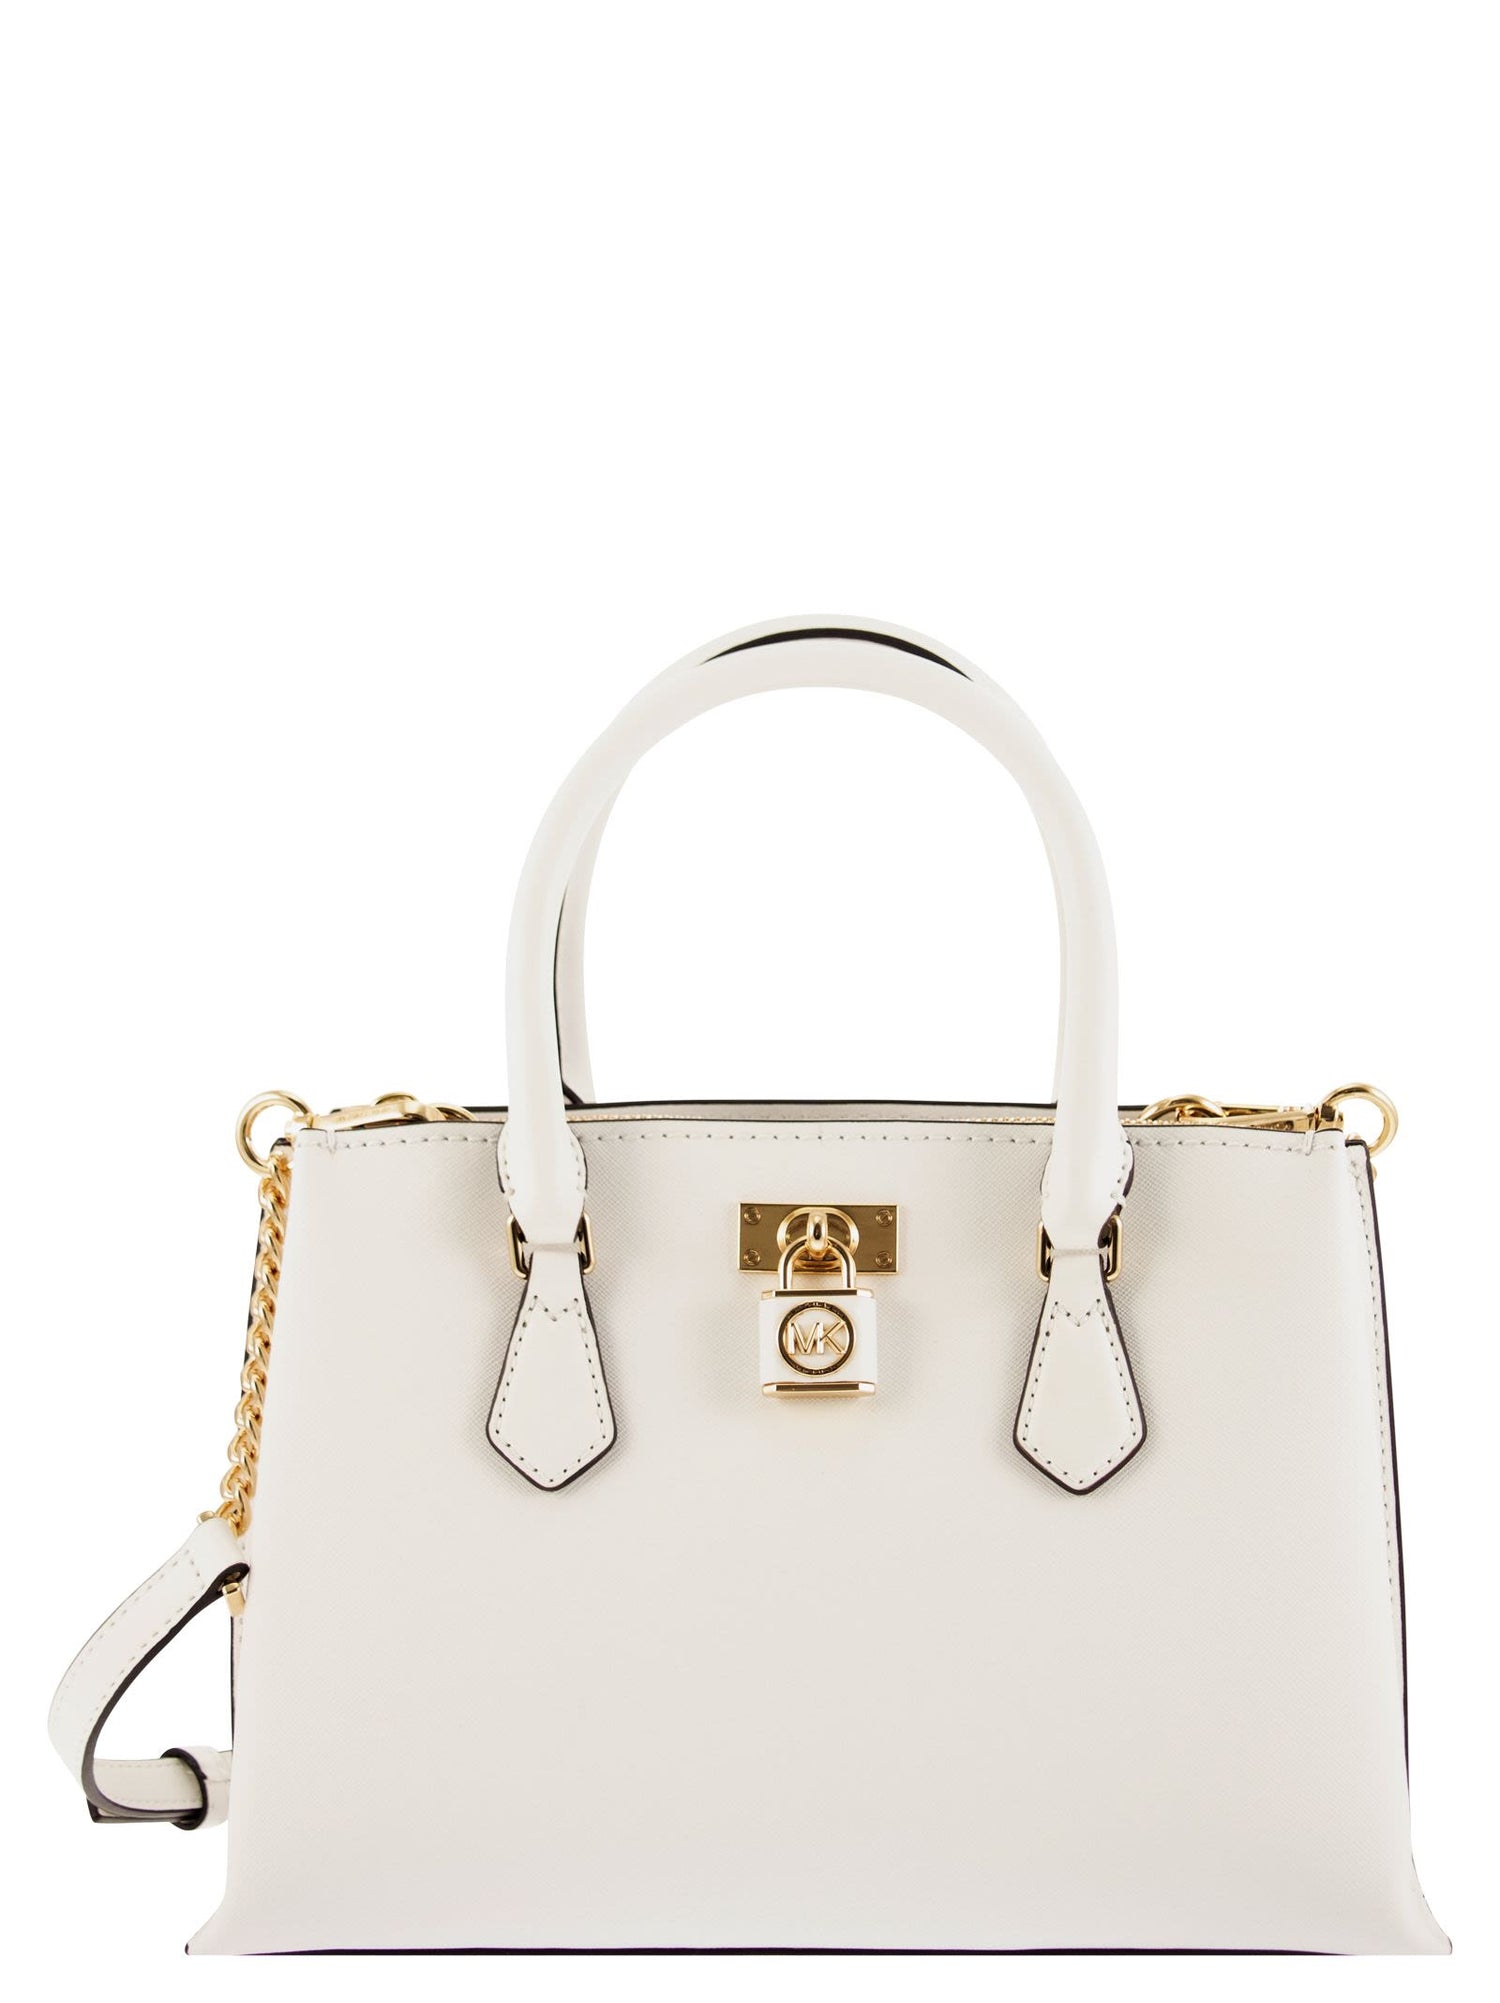 White Michael Kors gold Hardware  Saffiano leather, Handbag, Mk handbags